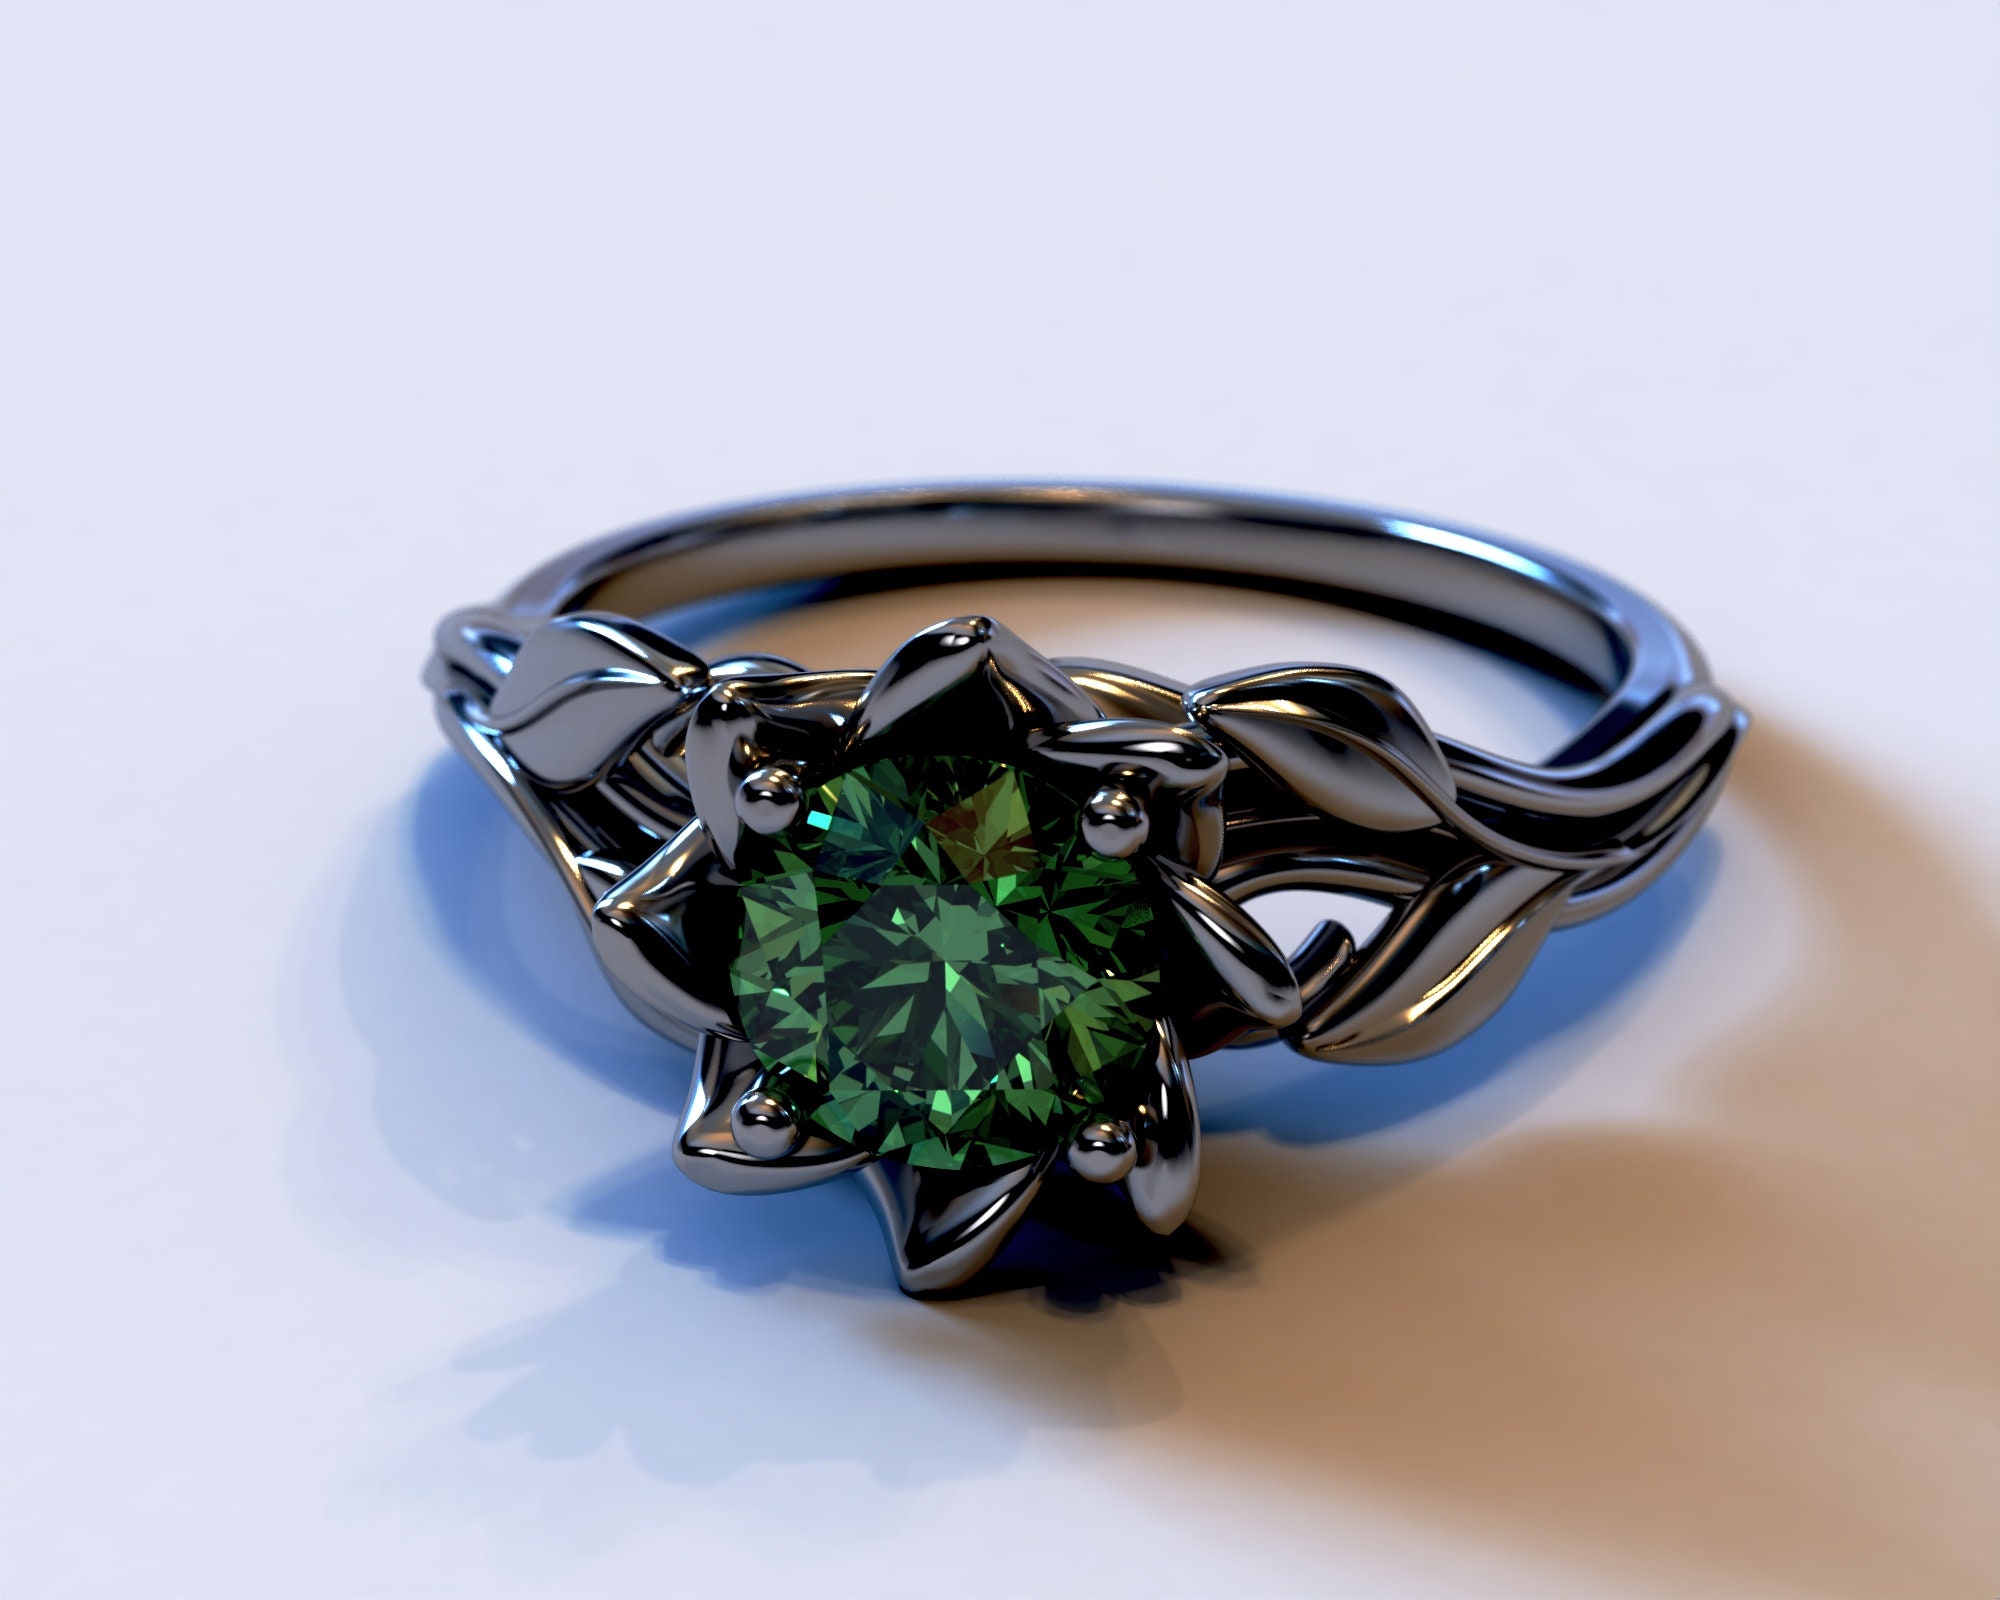 Allan Ring - Vidar Jewelry - Unique Custom Engagement And Wedding